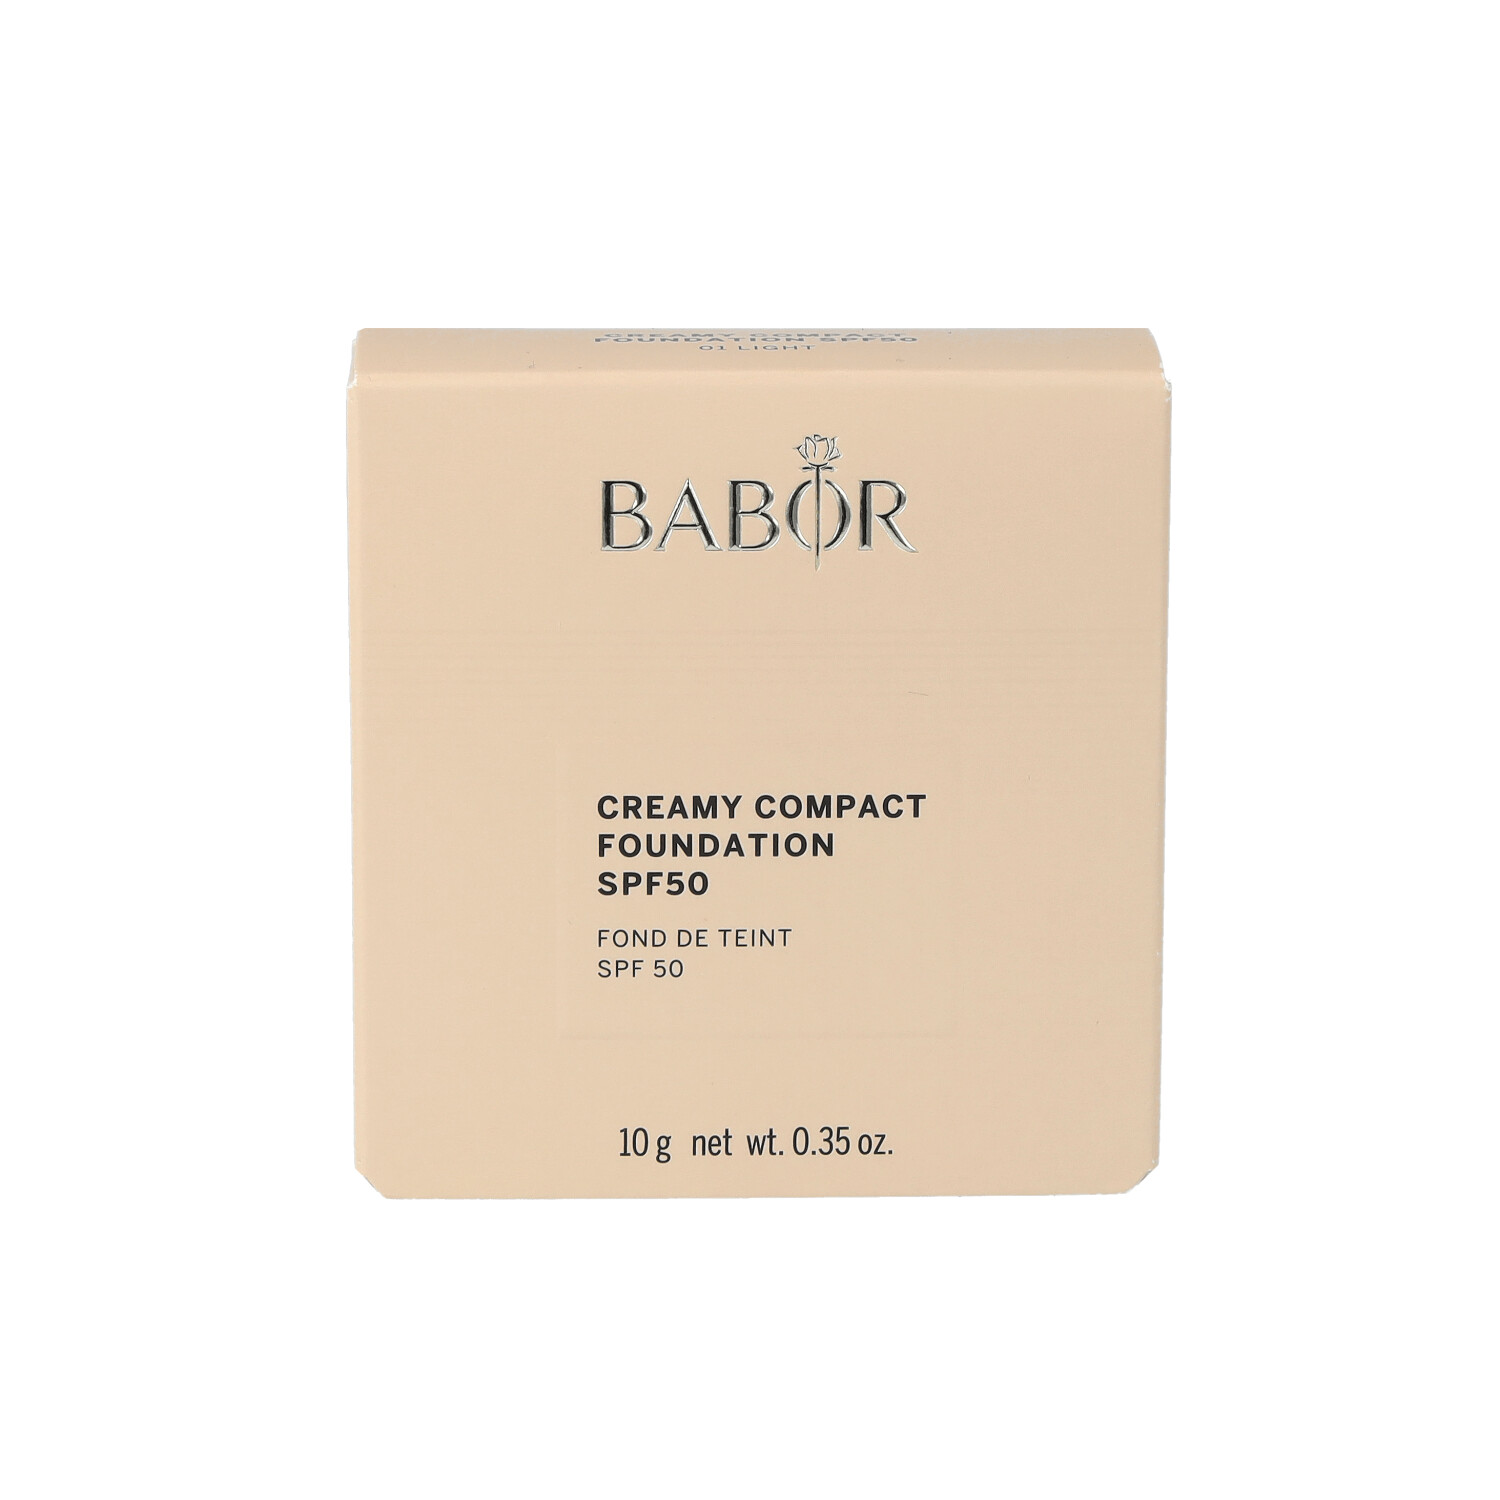 BABOR Creamy Compact Foundation SPF 50 01 light